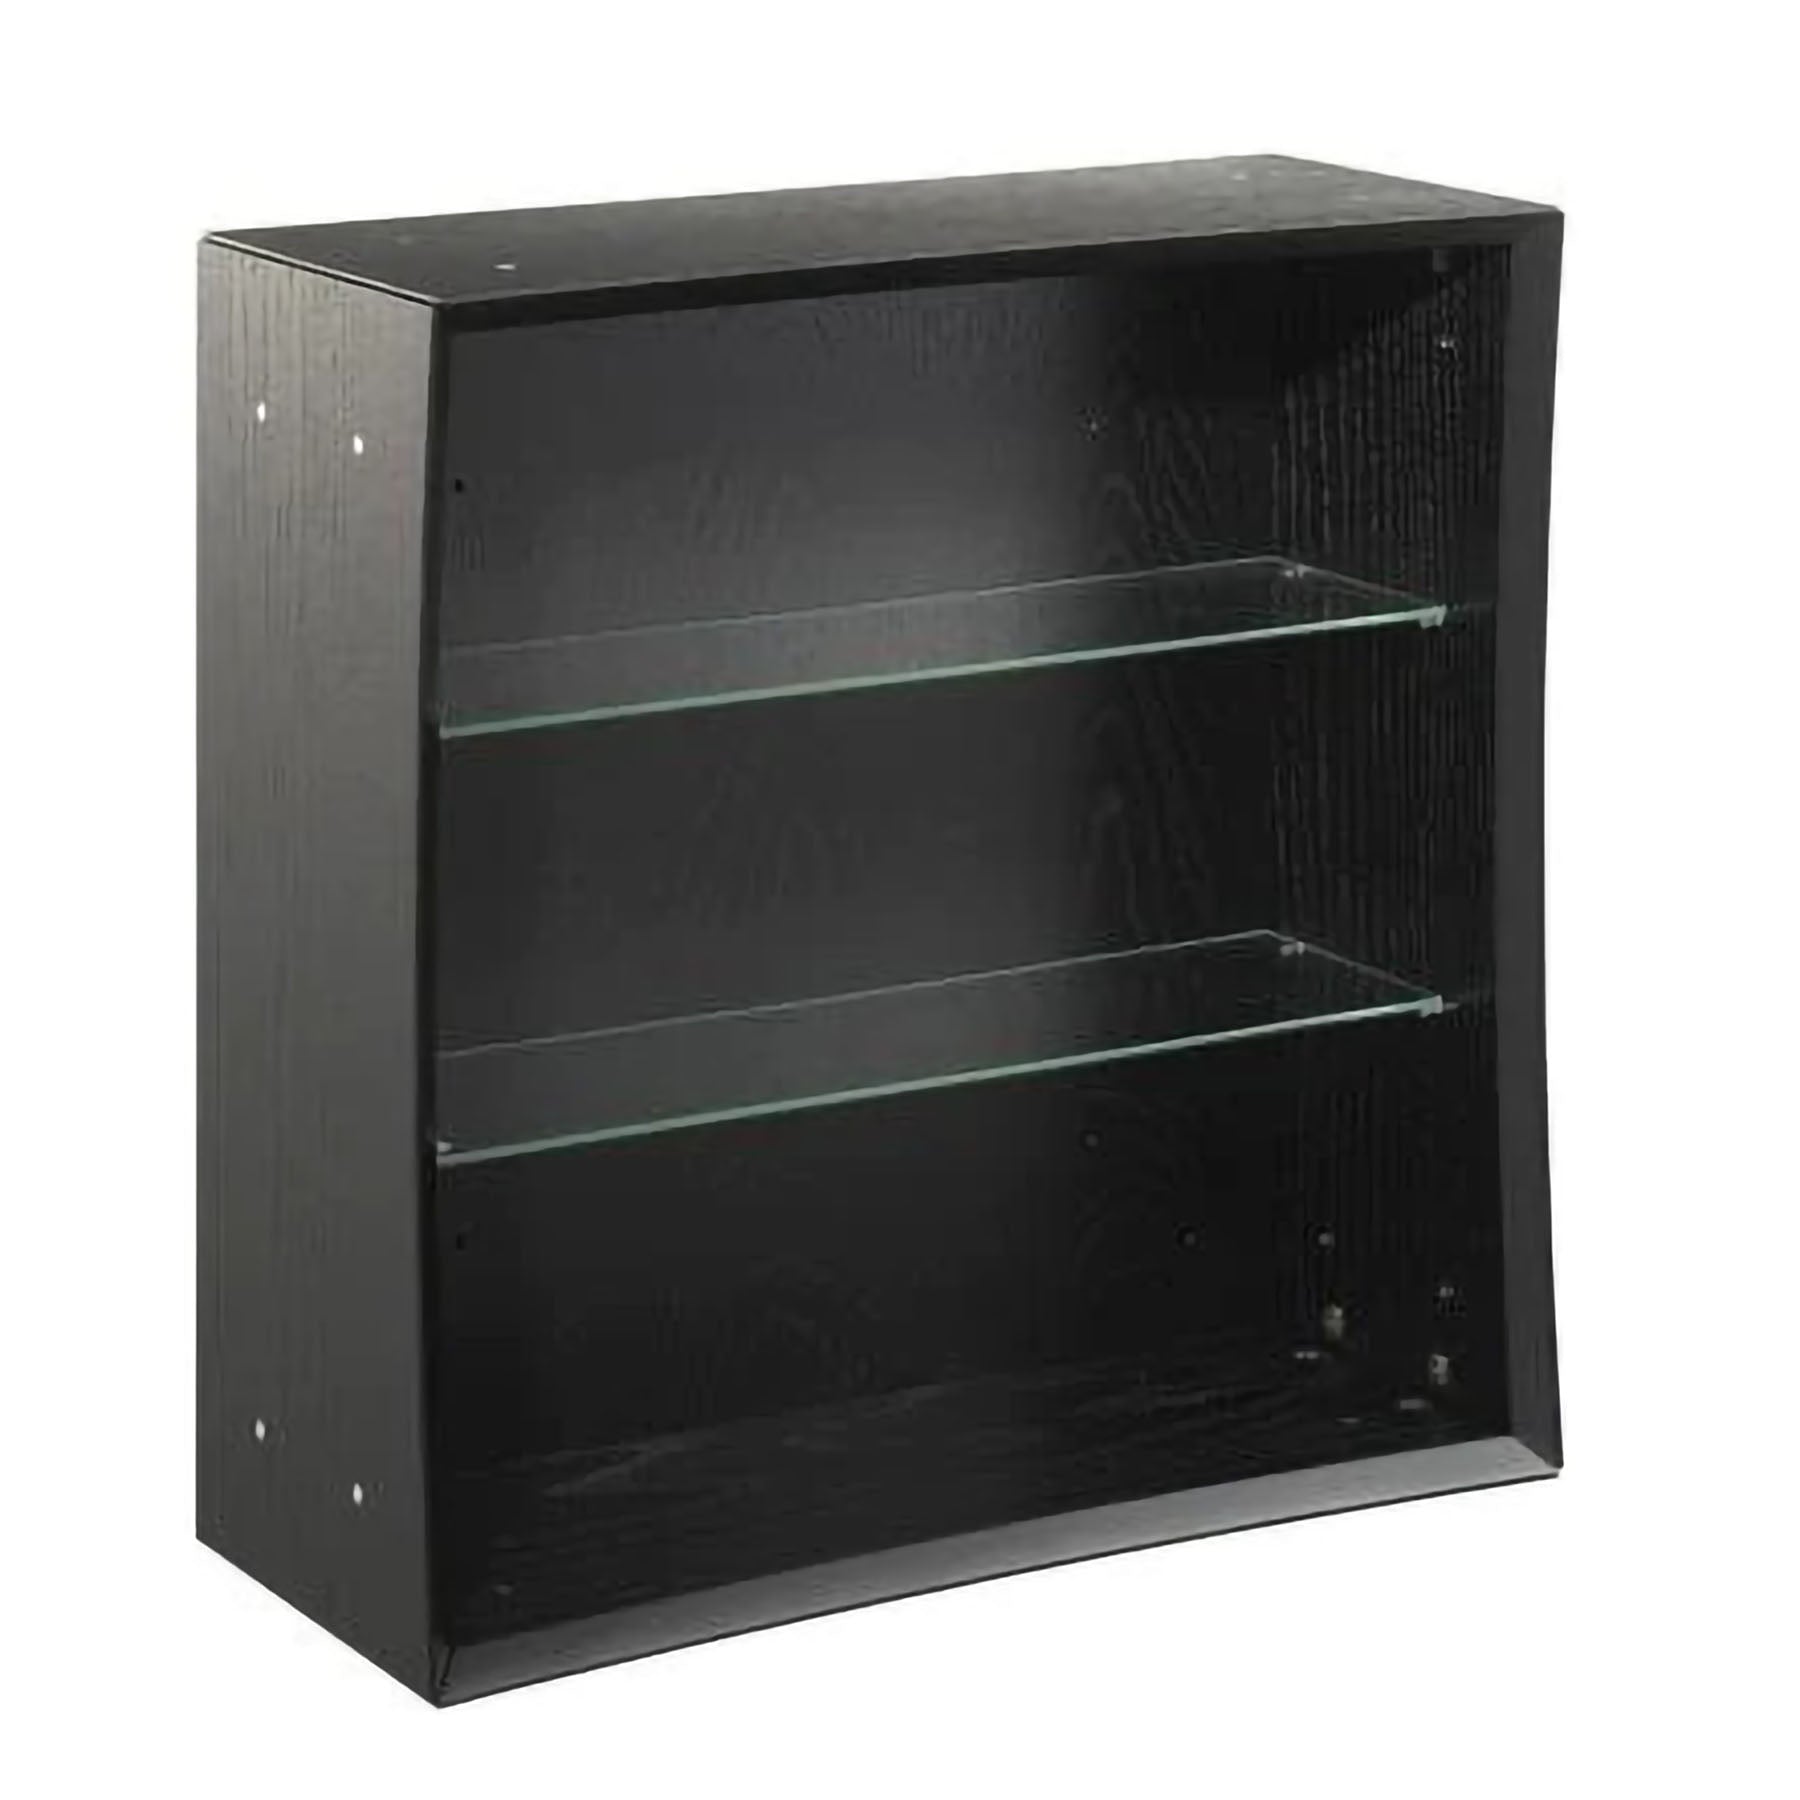 Quadraspire CD QUBE Modular Storage Cabinet